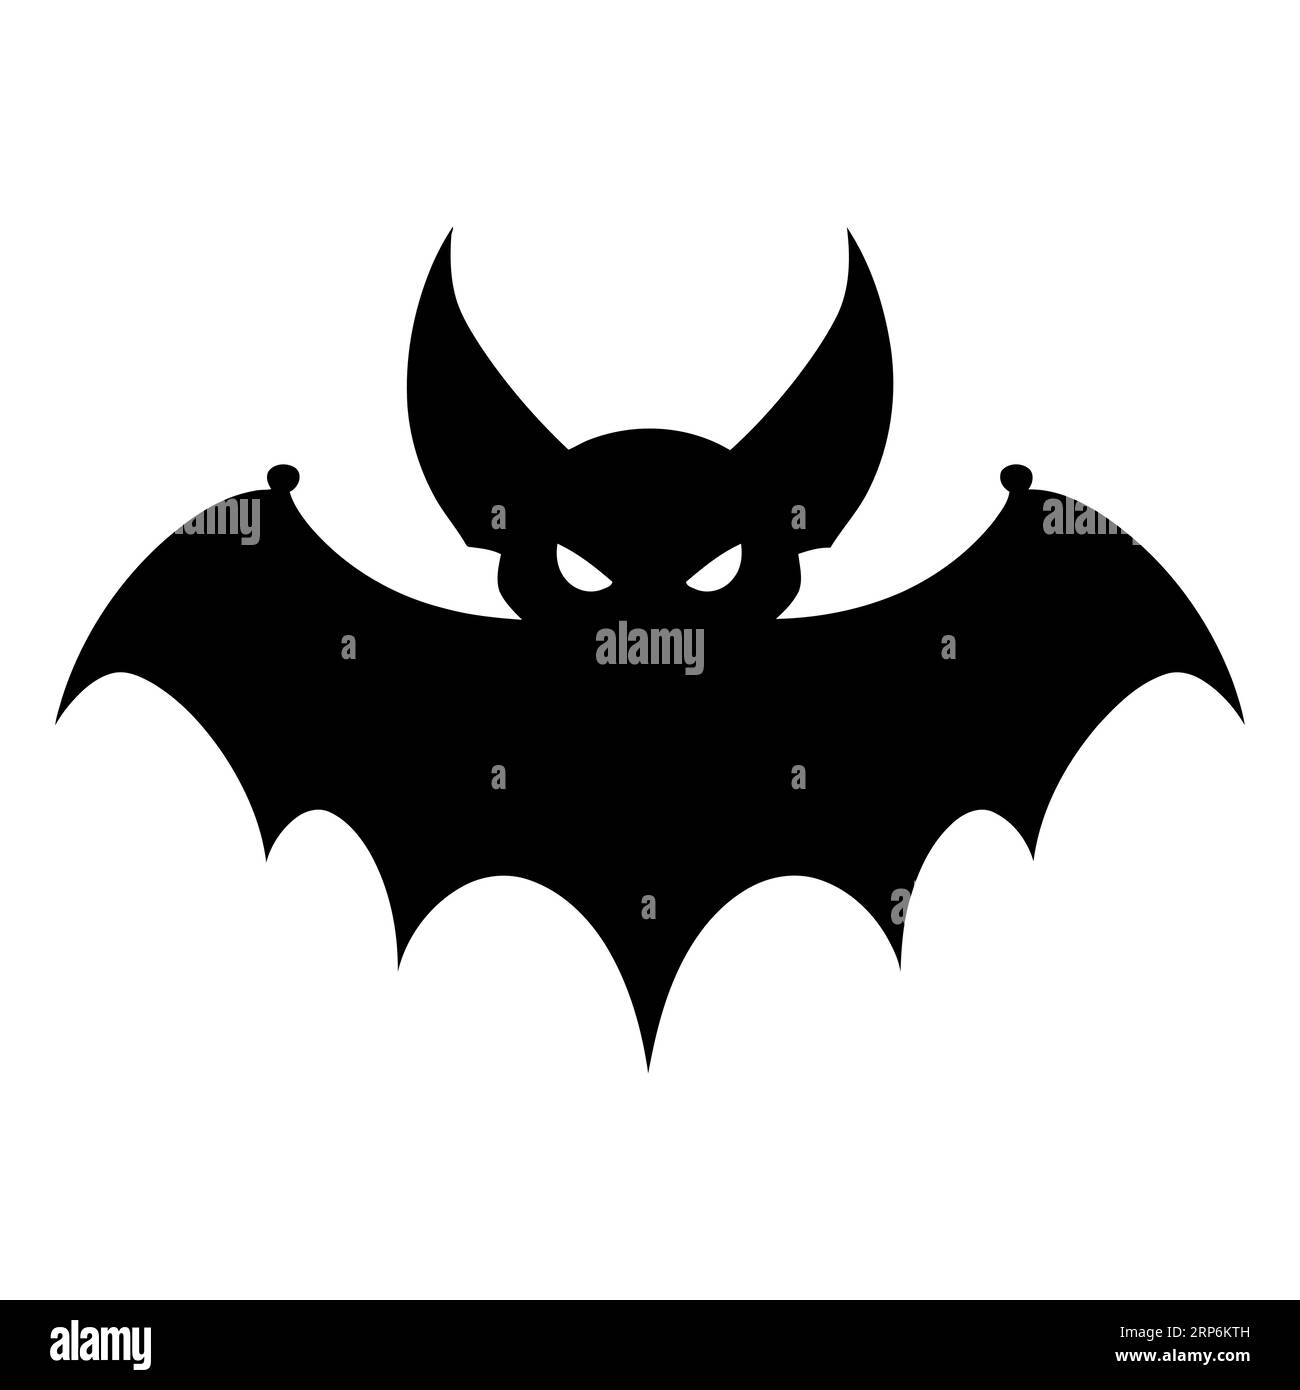 Bat icon. Bat silhouette. Black bat symbol. Vector illustration Stock Vector